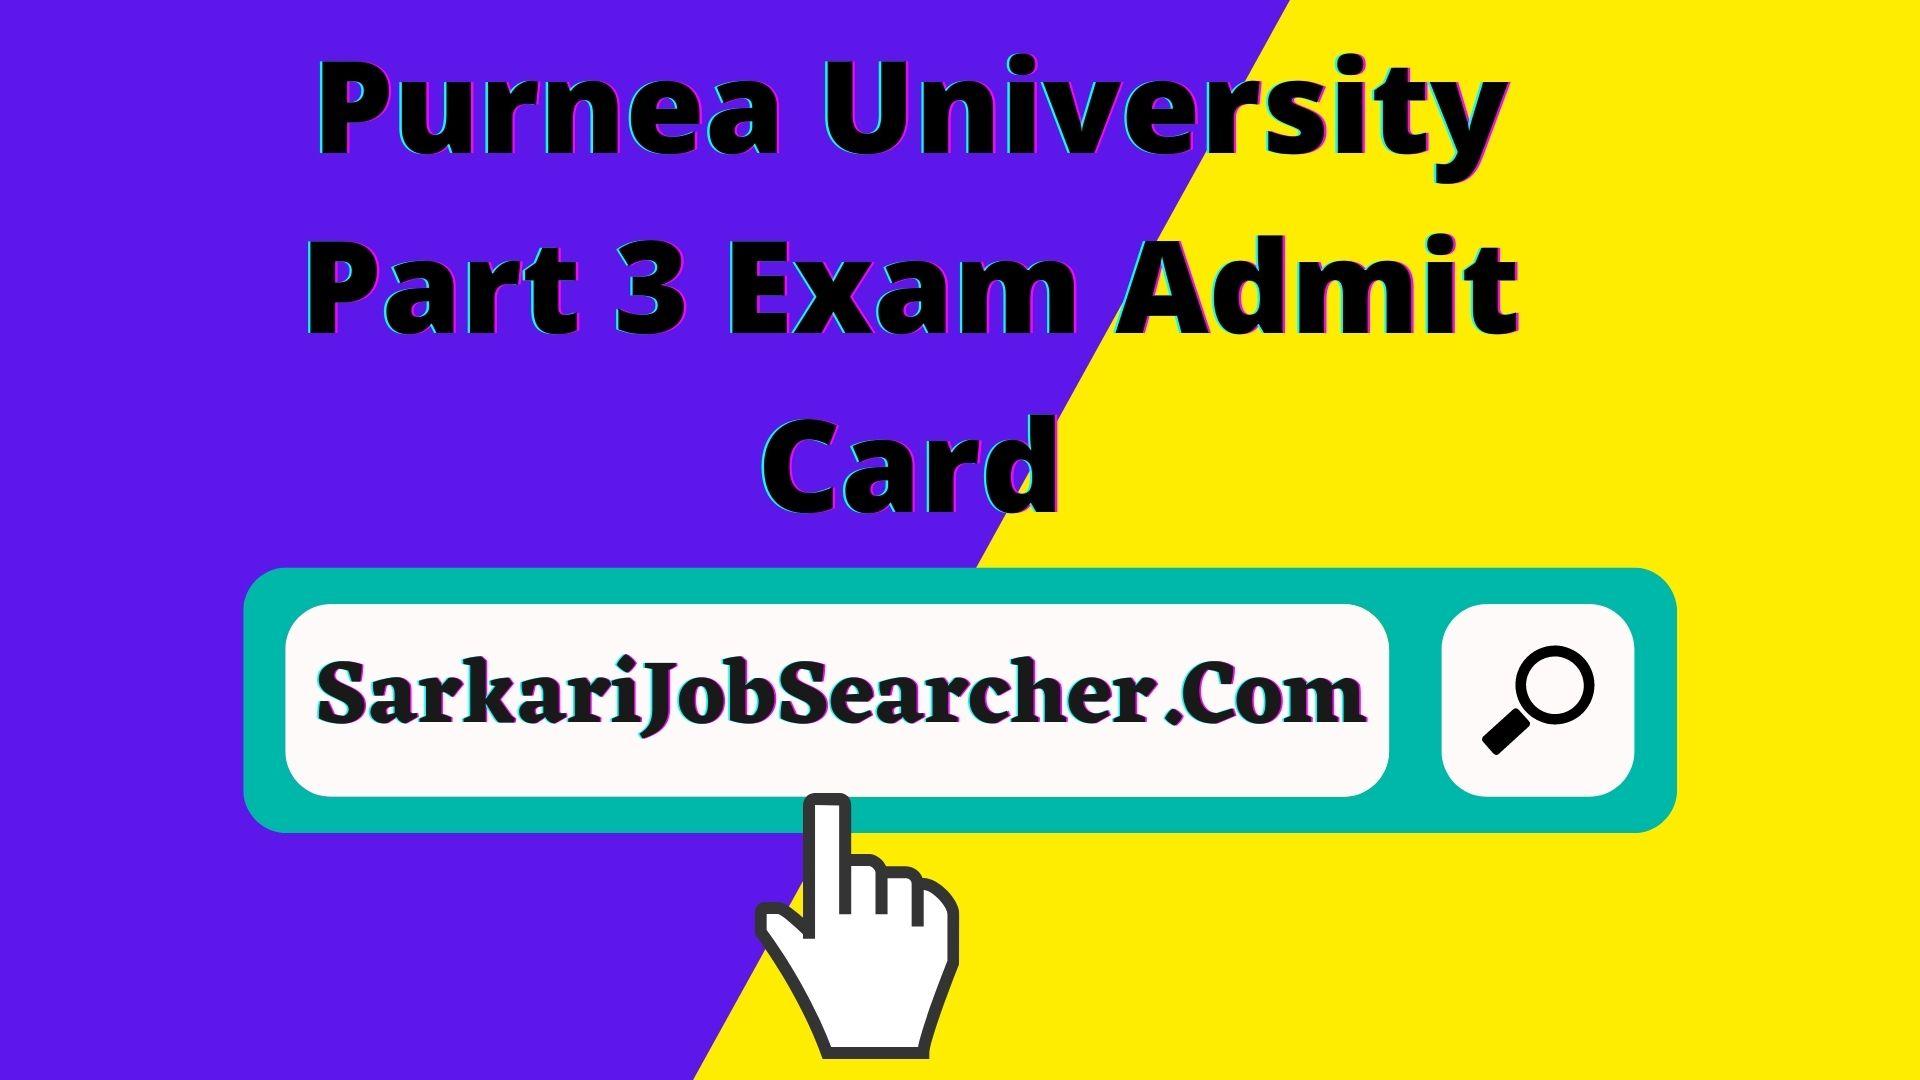 Purnea University Part 3 Exam Admit Card